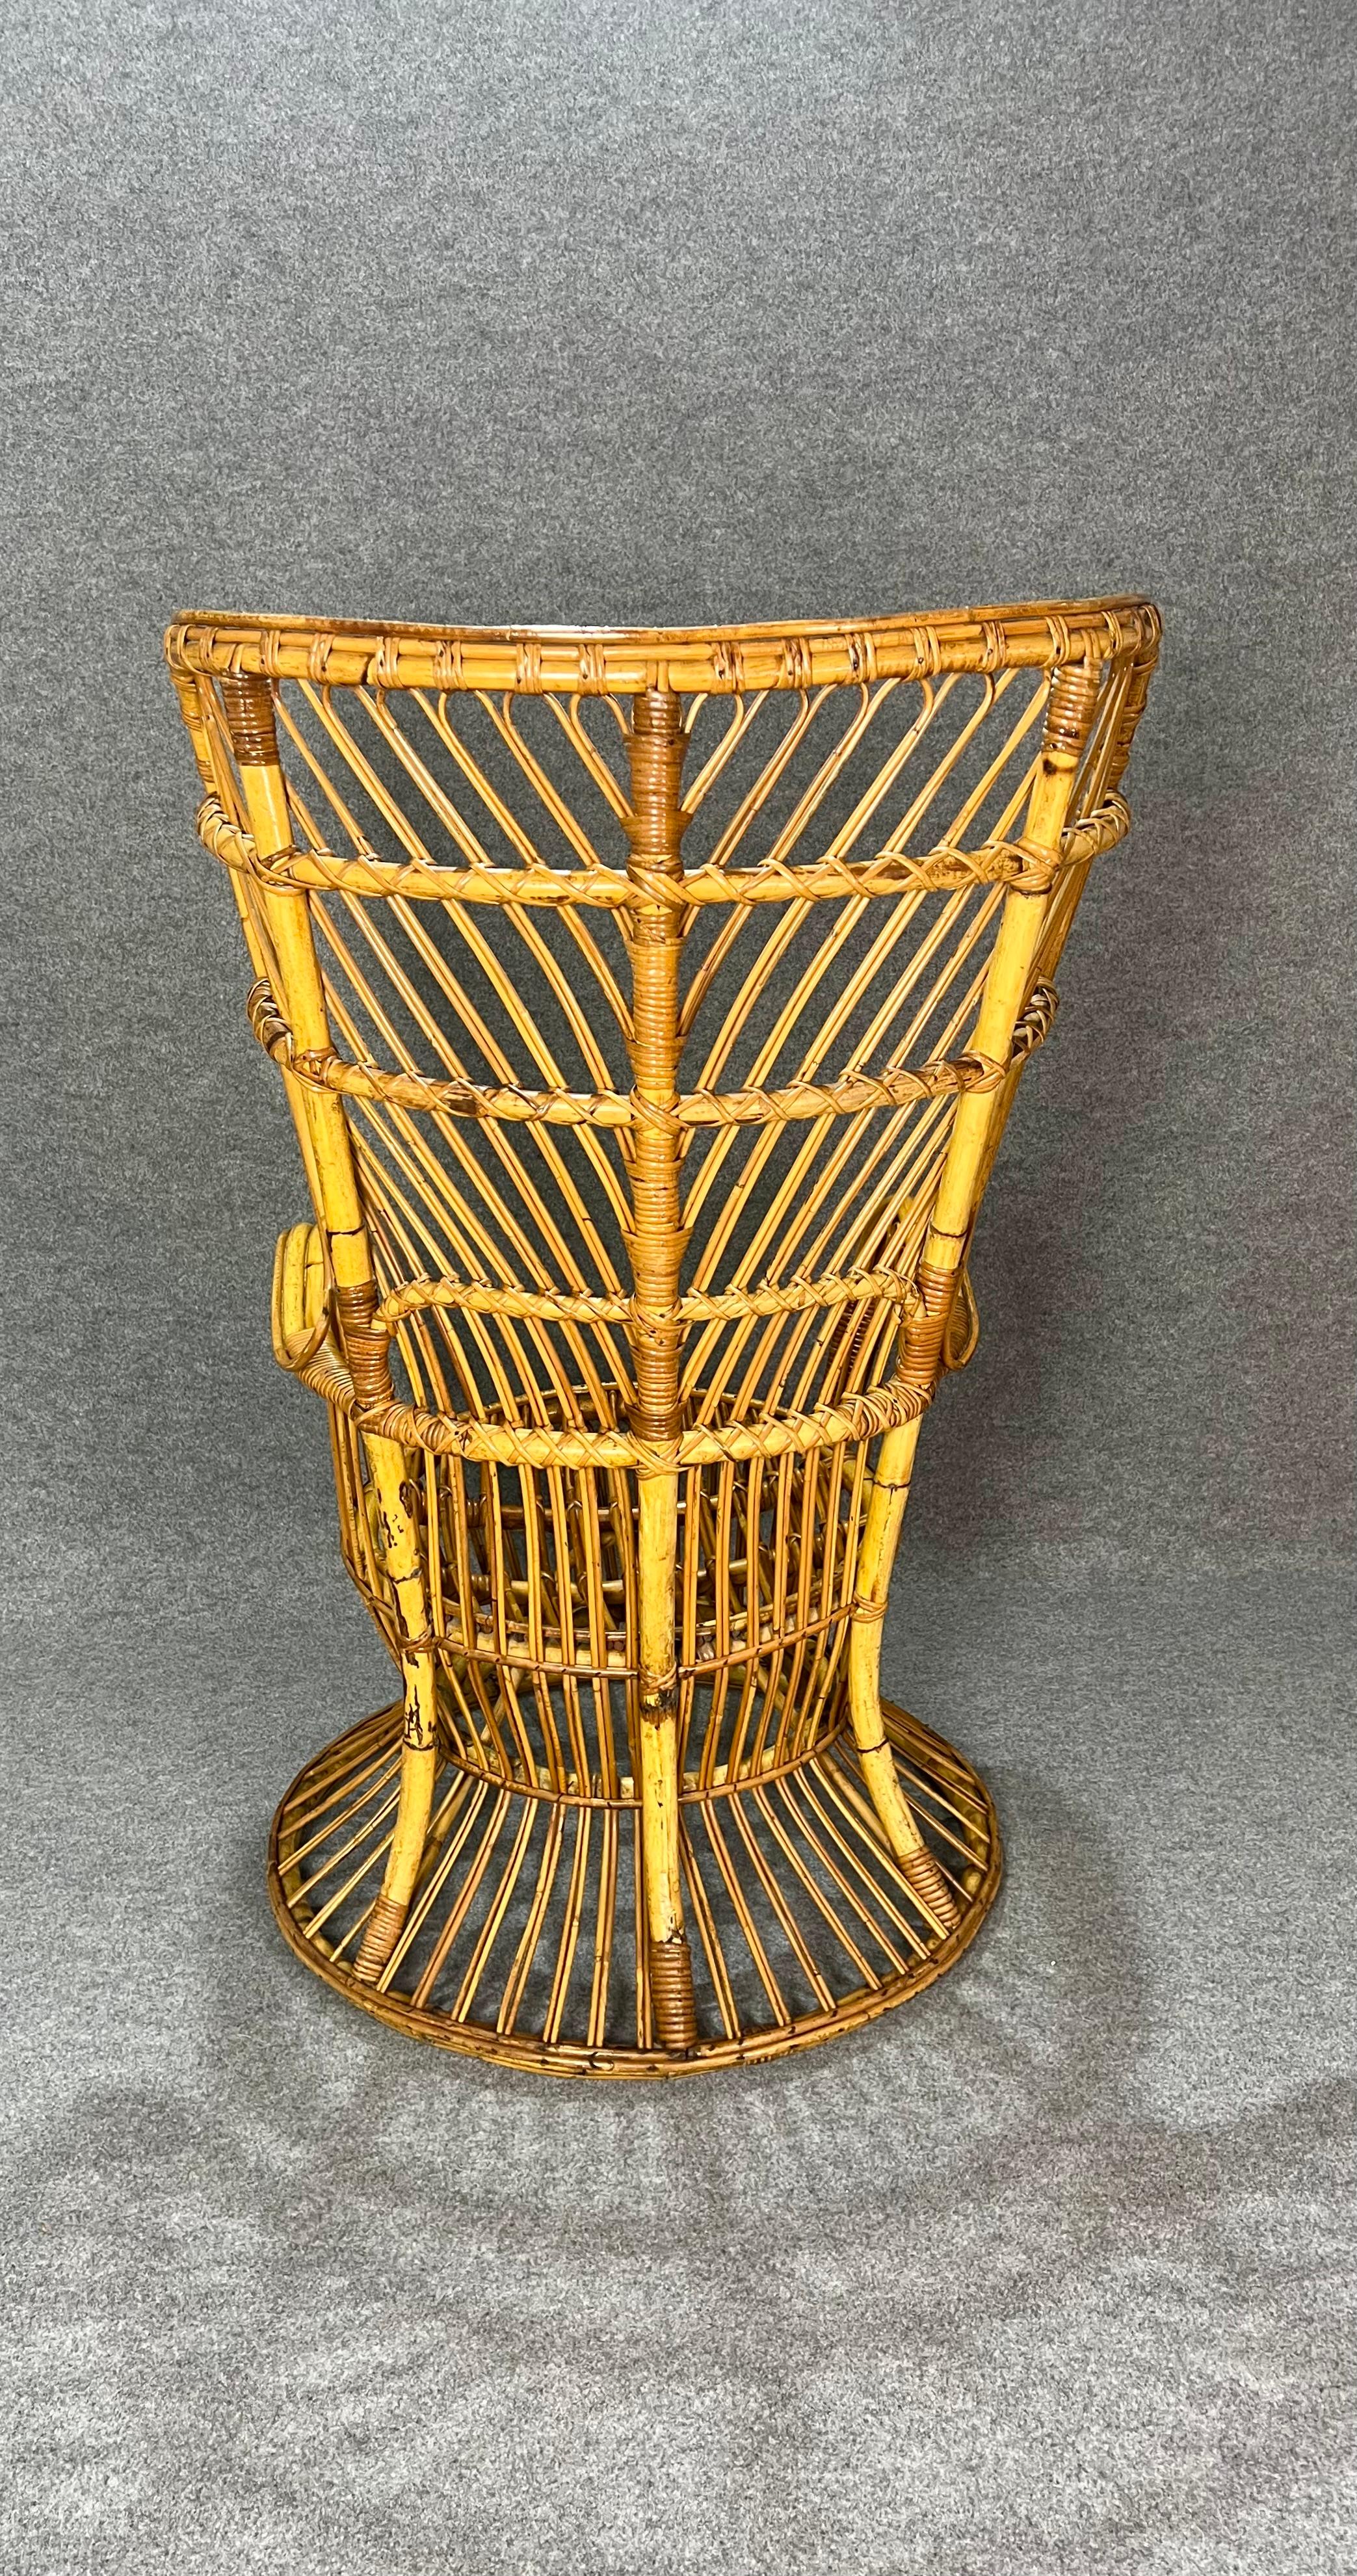 20th Century Armchair Bamboo Rattan In the Style of Gio Ponti Lio Carminati Midcentury 1950s For Sale